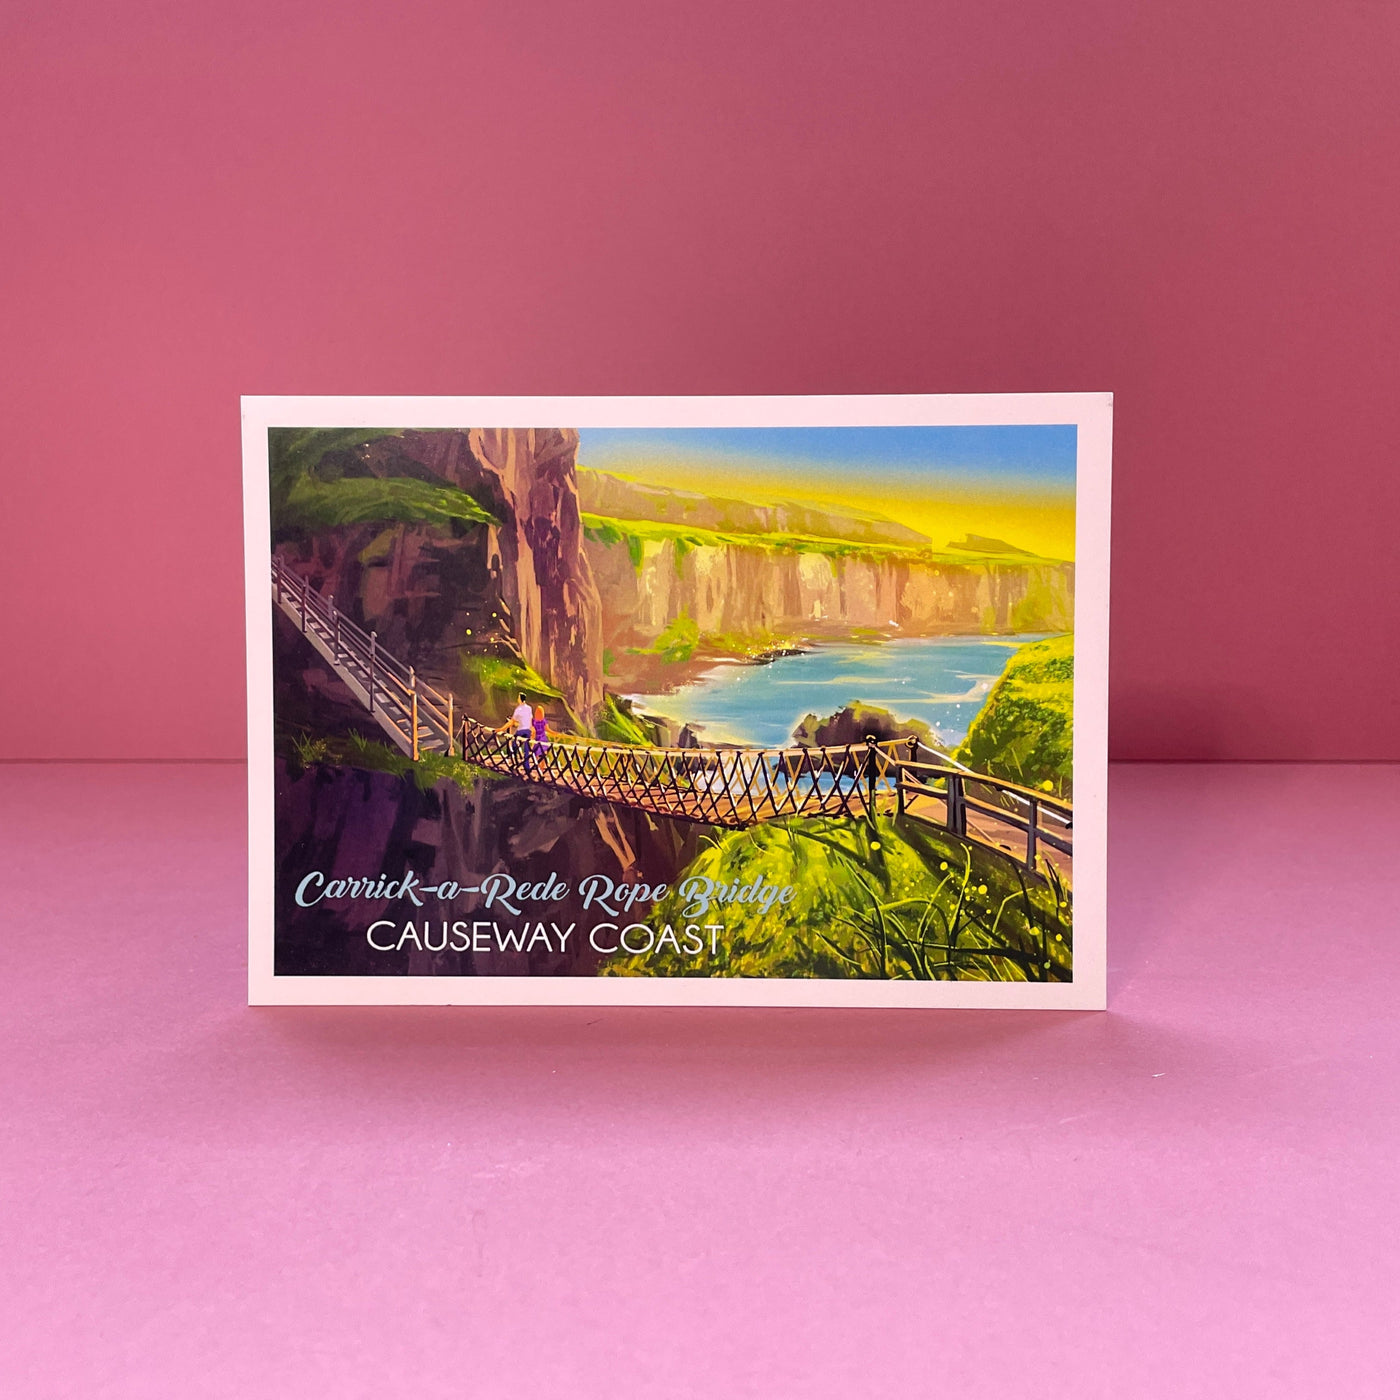 carrick-a-rede rope bridge postcard